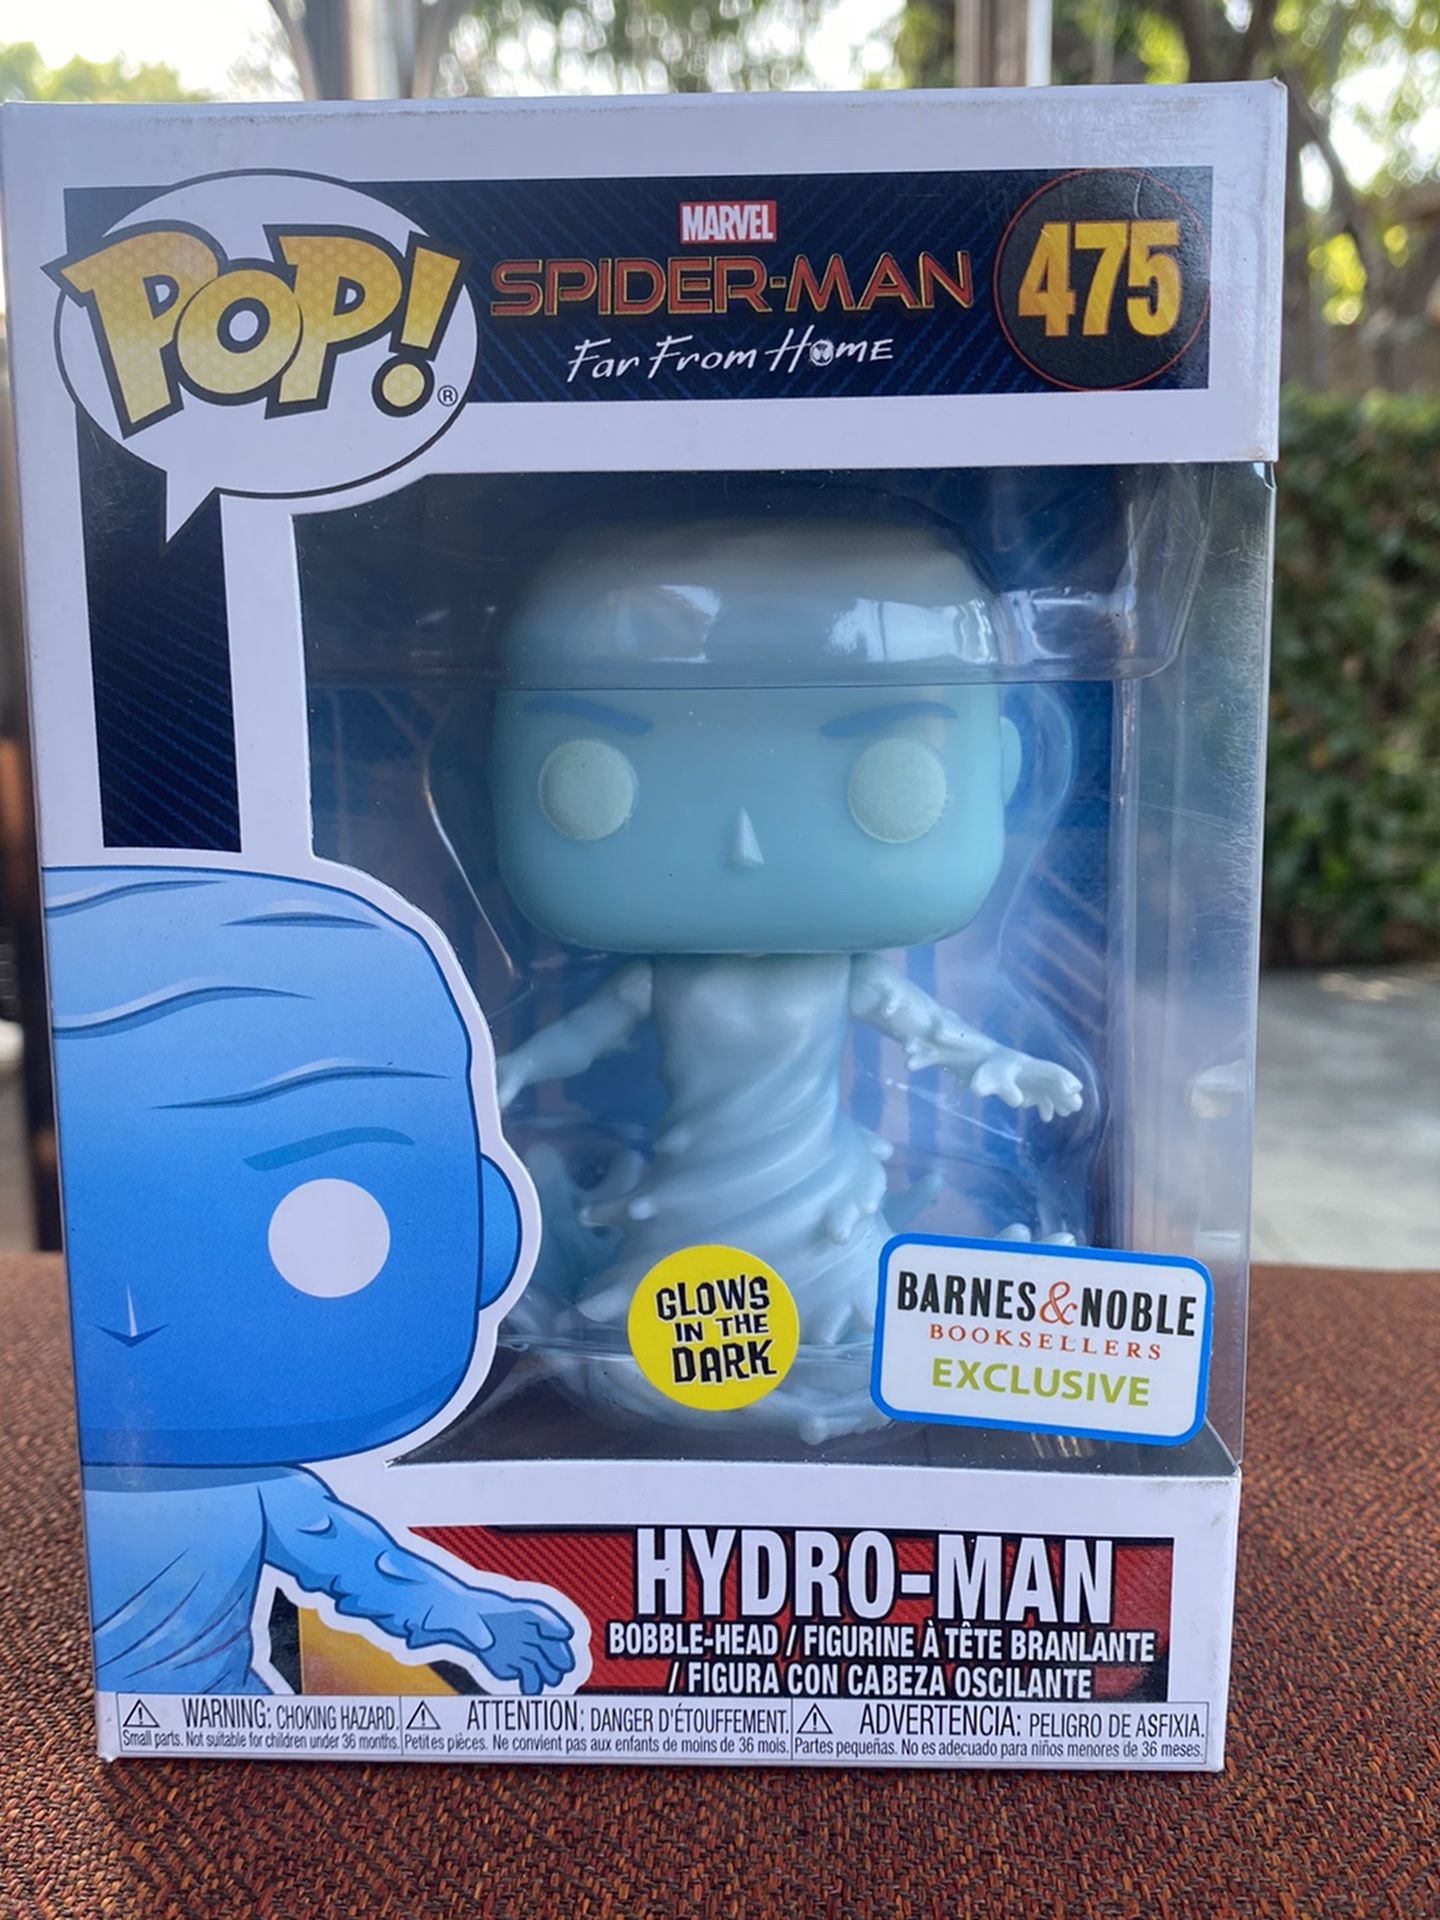 Isoleren Arabisch Mount Bank Funko Pop Hydro-Man Spider Man Spider-Man Marvel GITD Glow In The Dark  Barnes & Noble Exclusive 475 for Sale in Los Angeles, CA - OfferUp